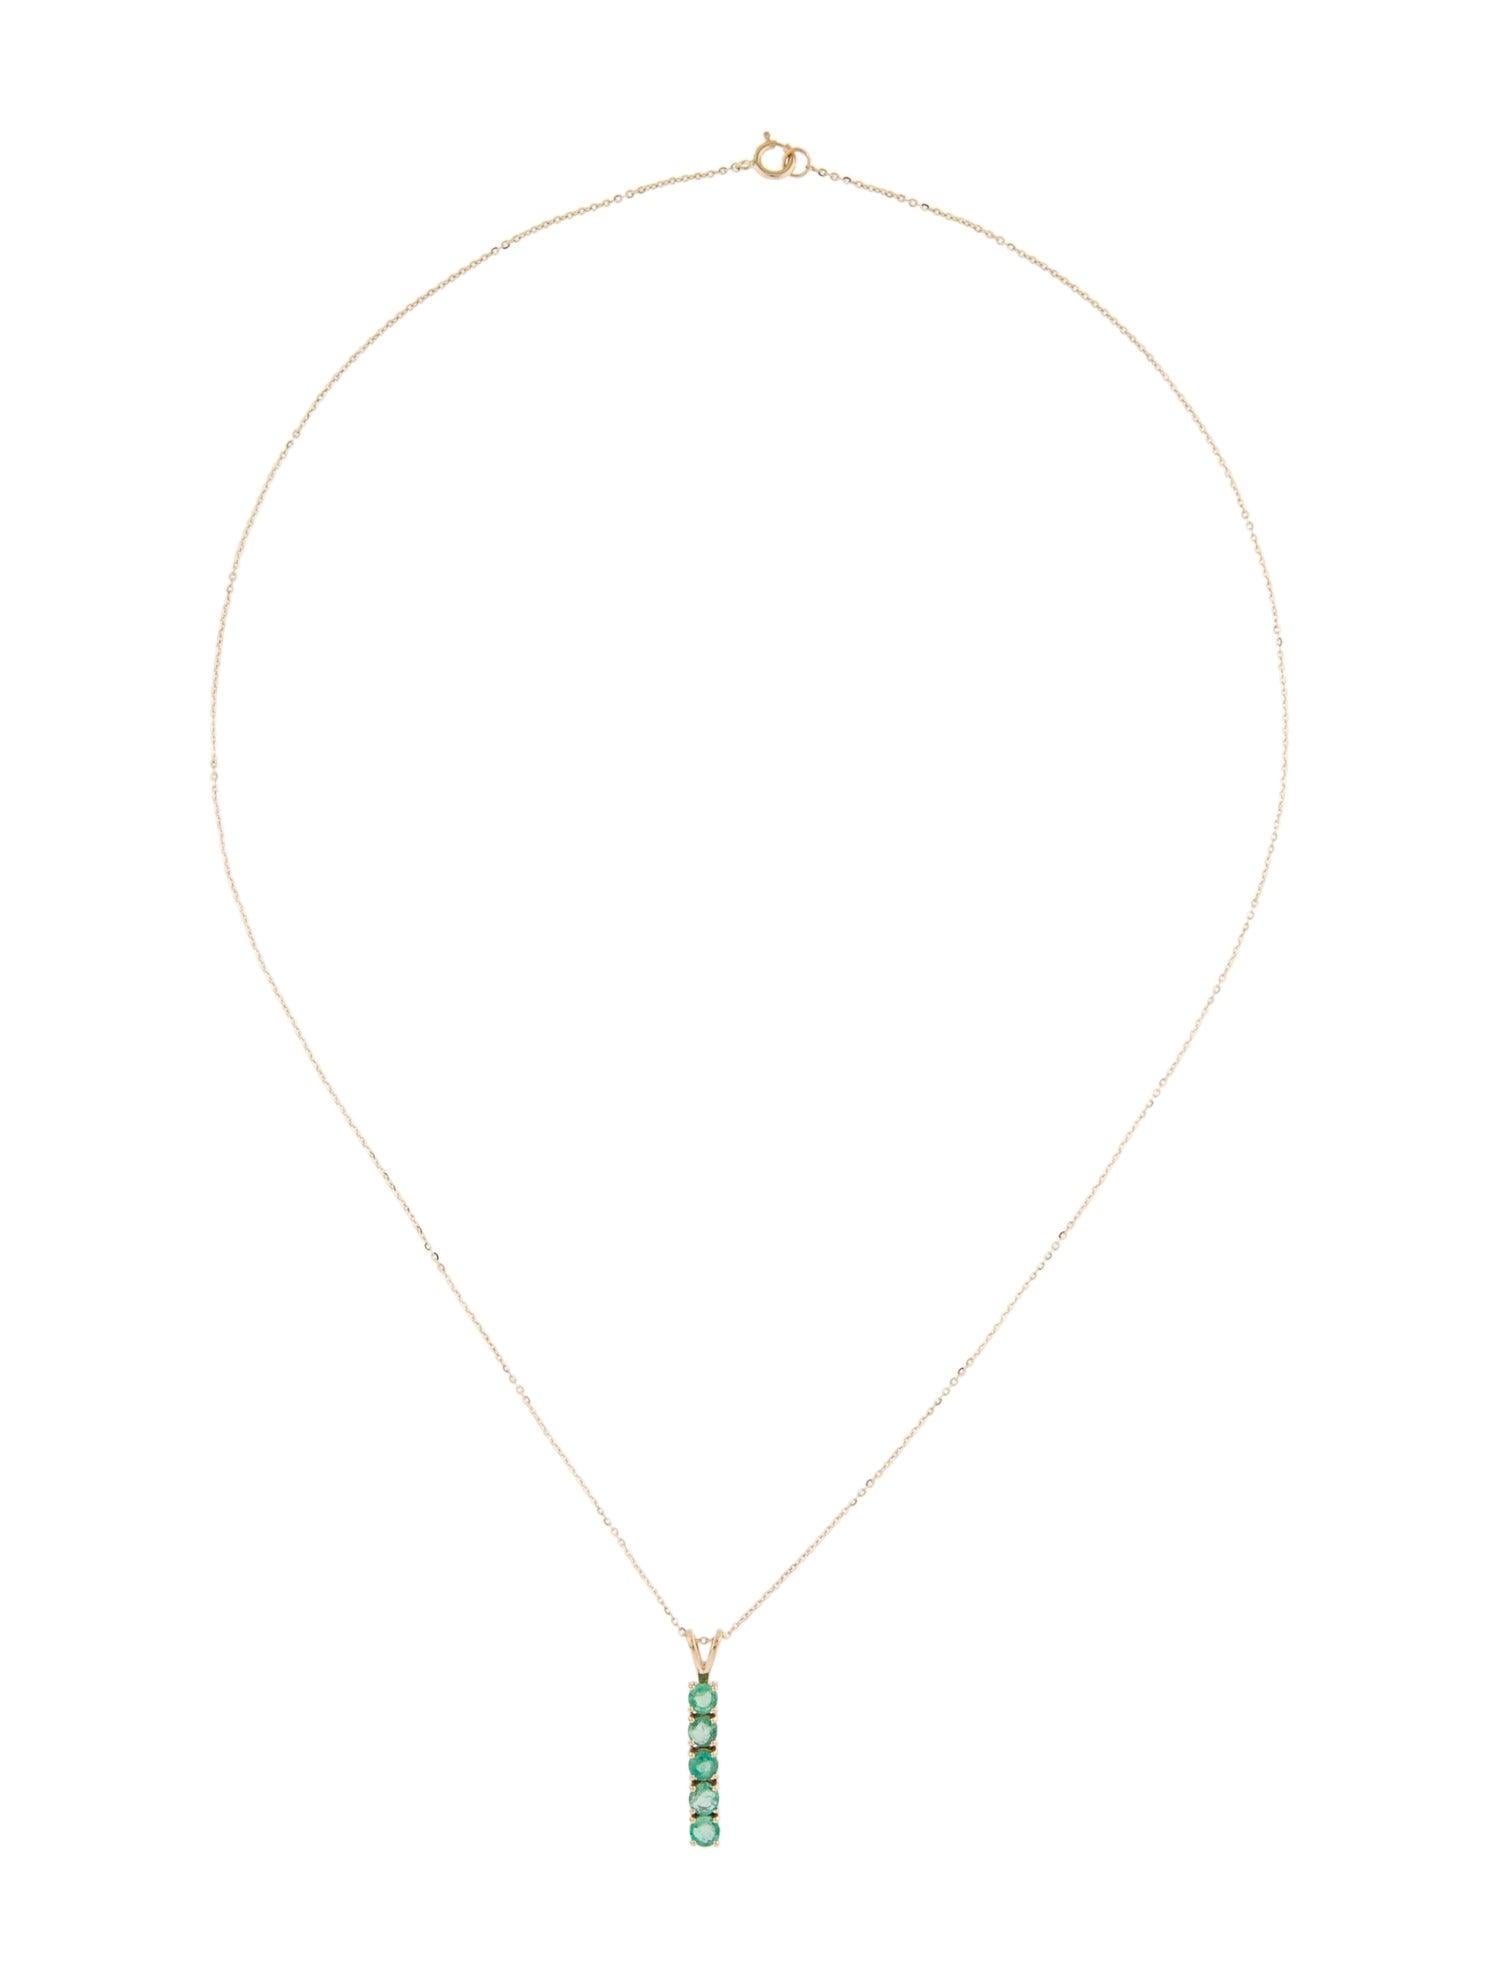 Brilliant Cut Elegant 14K Emerald Pendant Necklace: Exquisite Luxury Statement Jewelry Piece For Sale